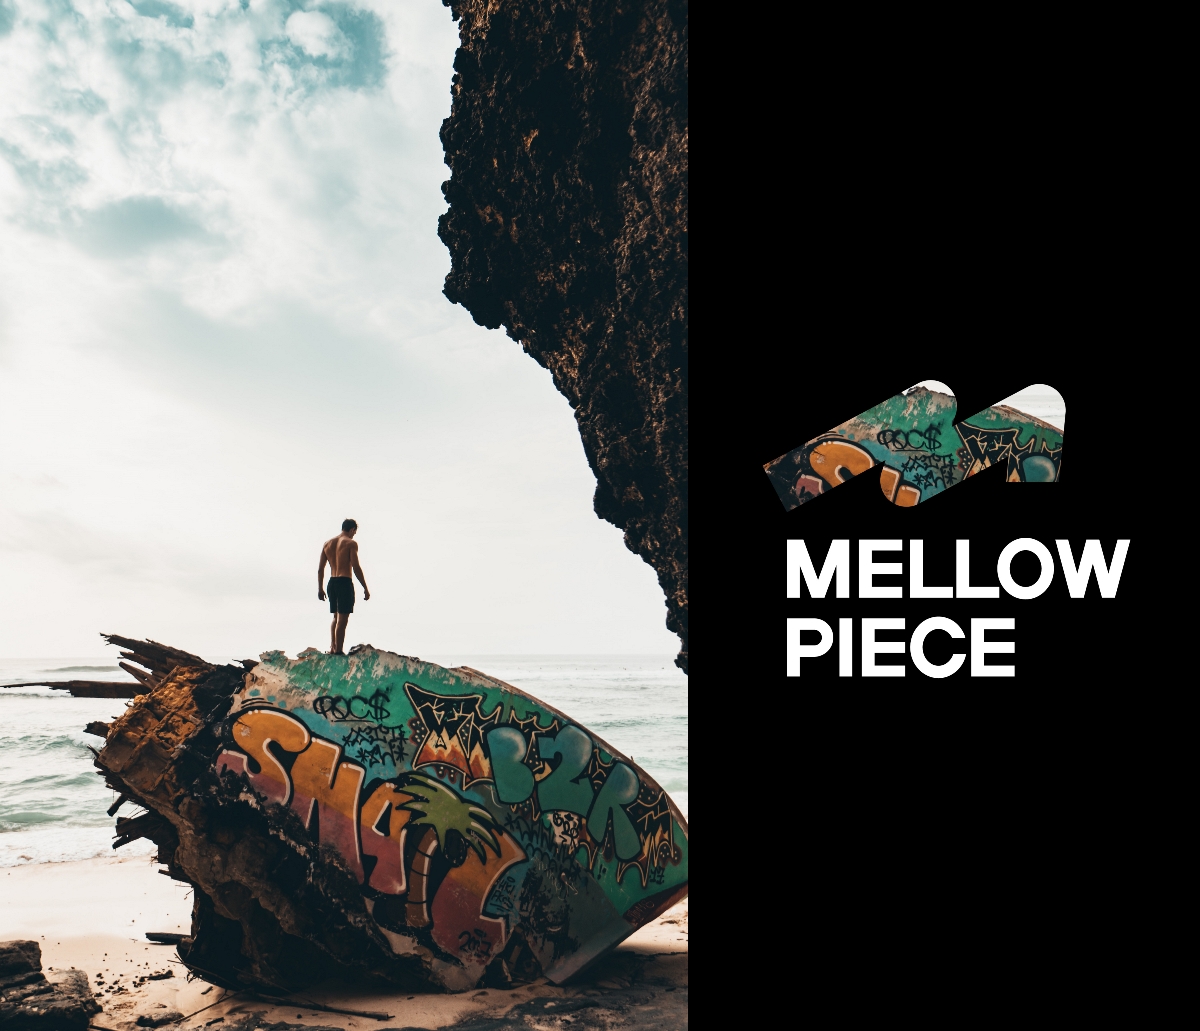 MELLOW PIECE 男士内衣品牌设计 logo设计 